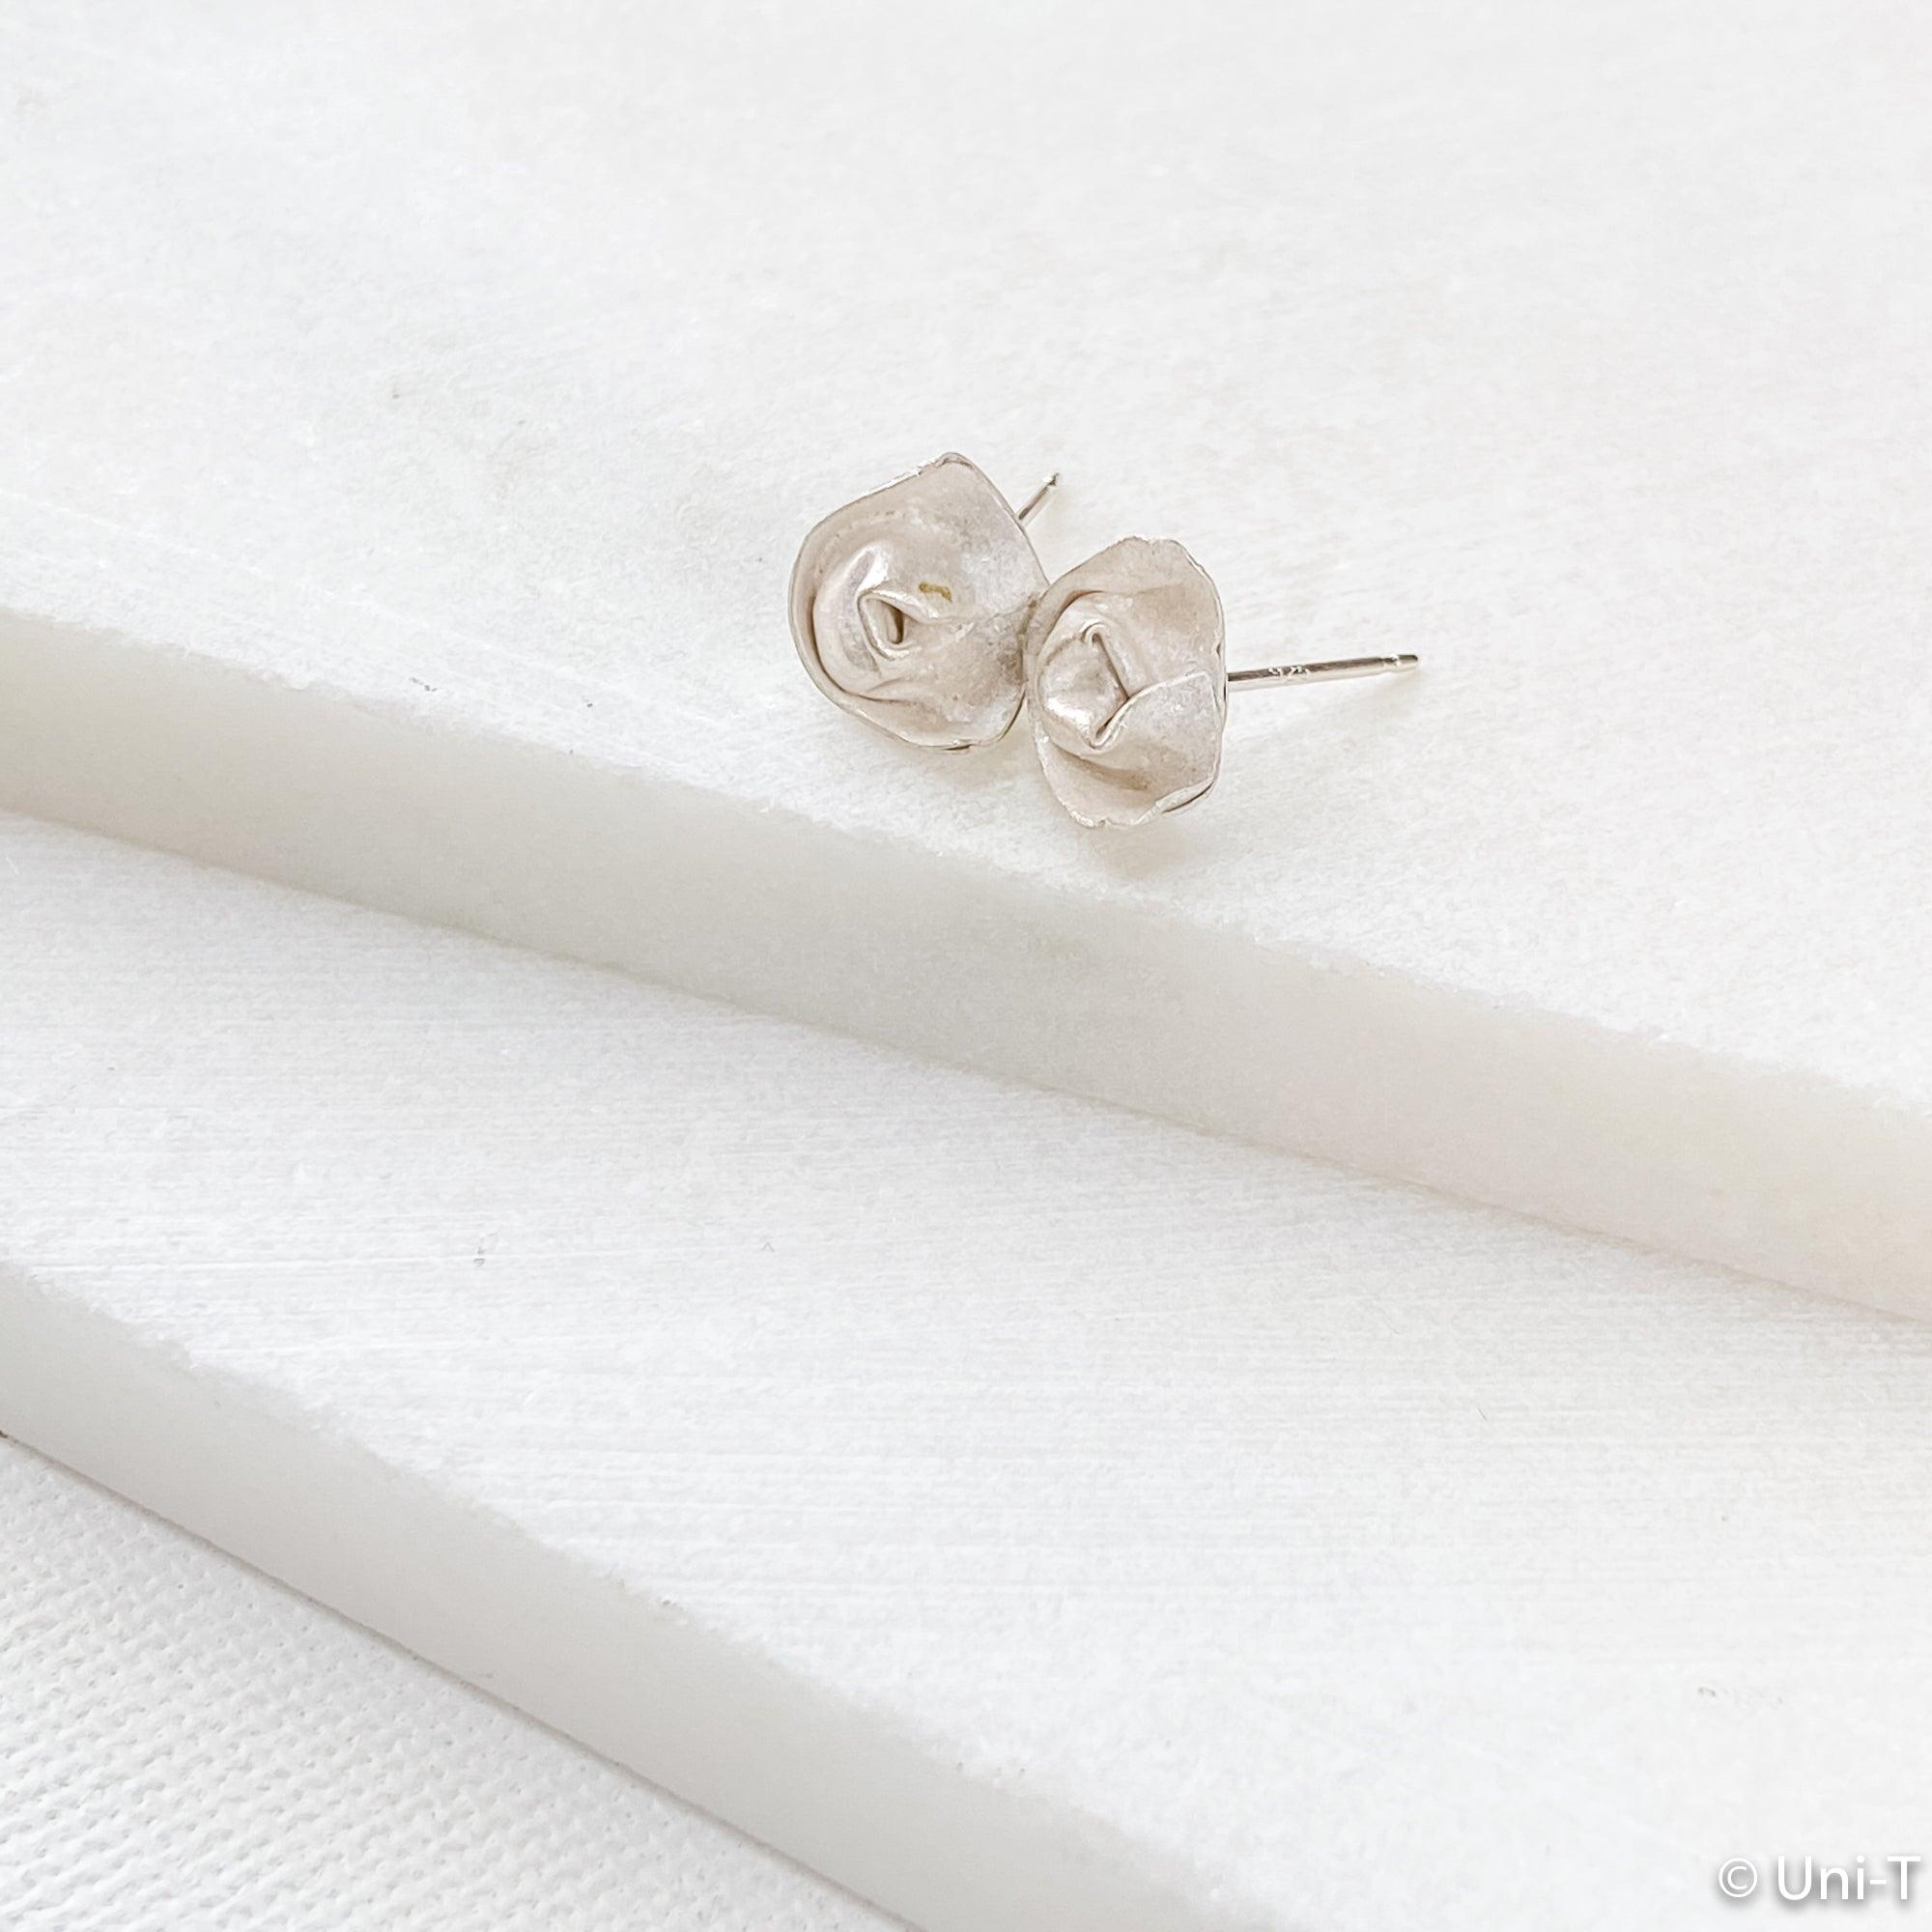 Fine Silver Flower Studs Earrings, 99% Pure Silver Precious Metal Clay